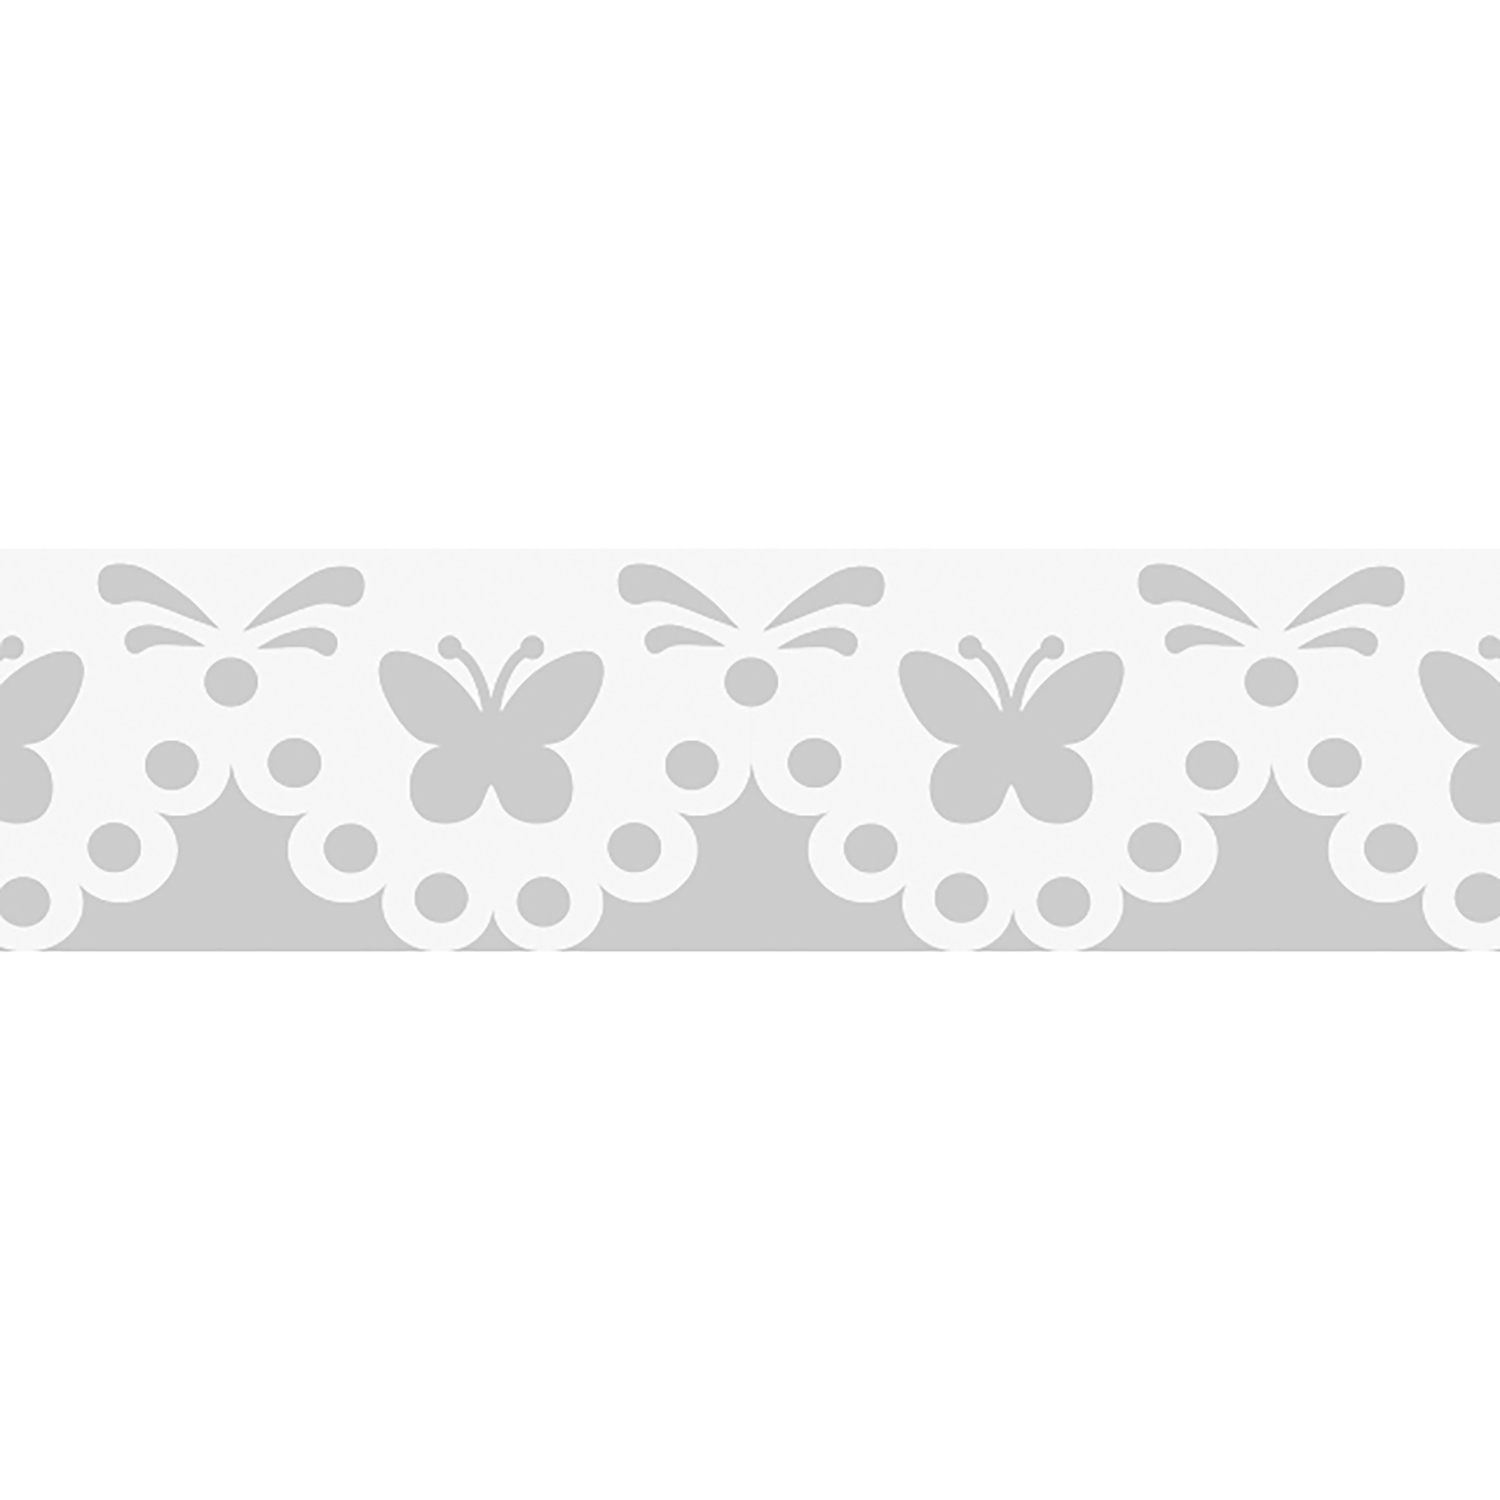 NEU Papierspitze selbstklebend, 2 m x 12 mm, Schmetterling Weiß